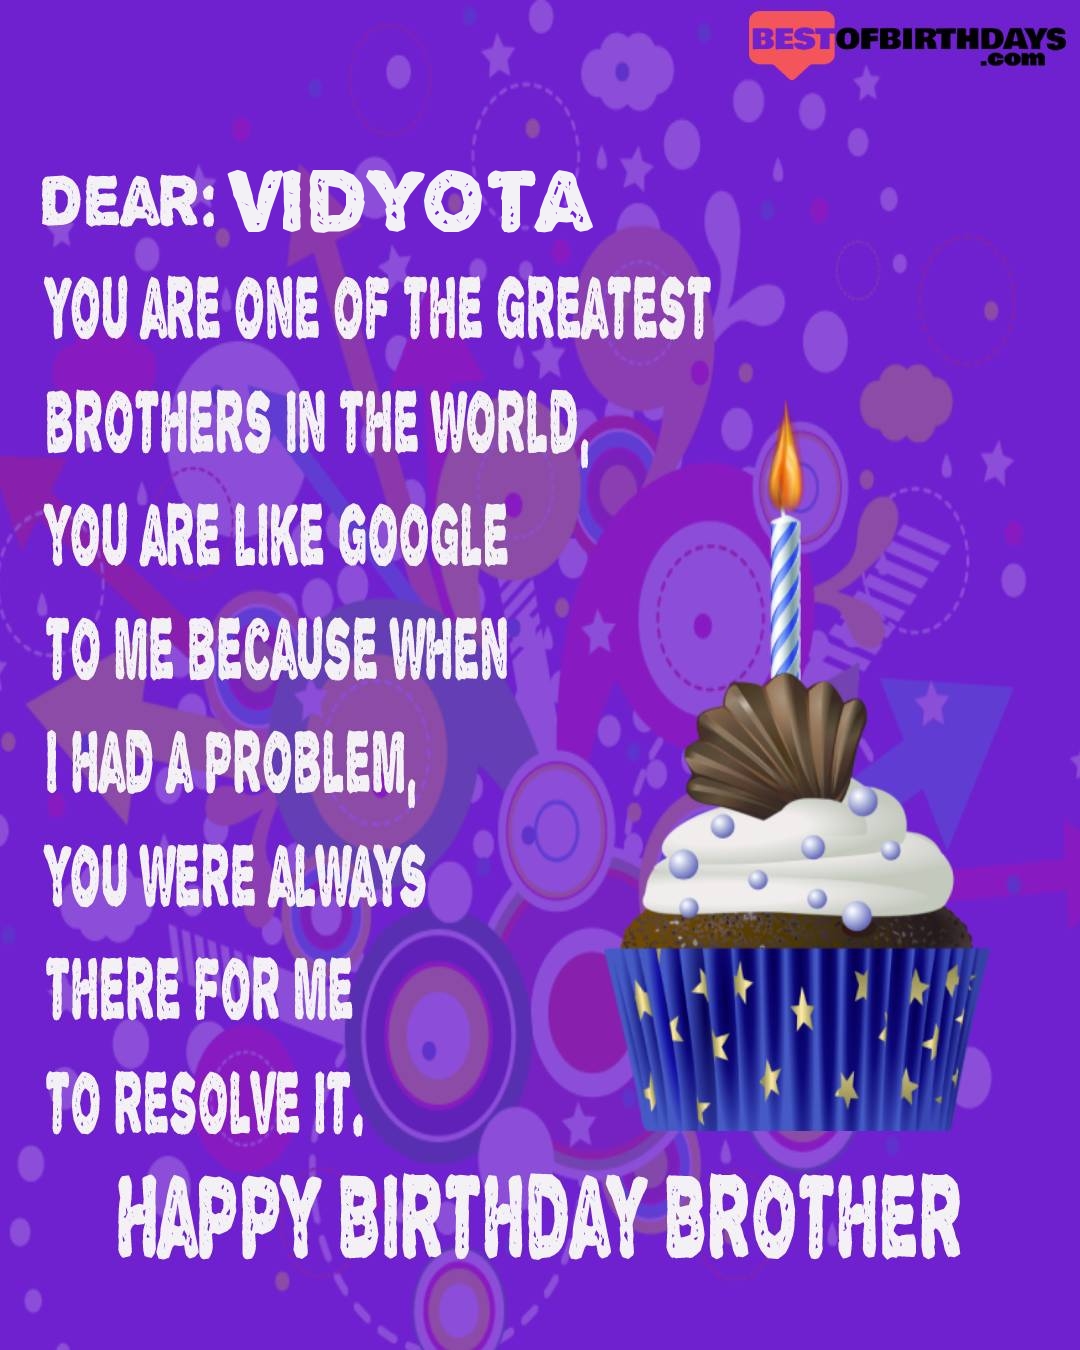 Happy birthday vidyota bhai brother bro